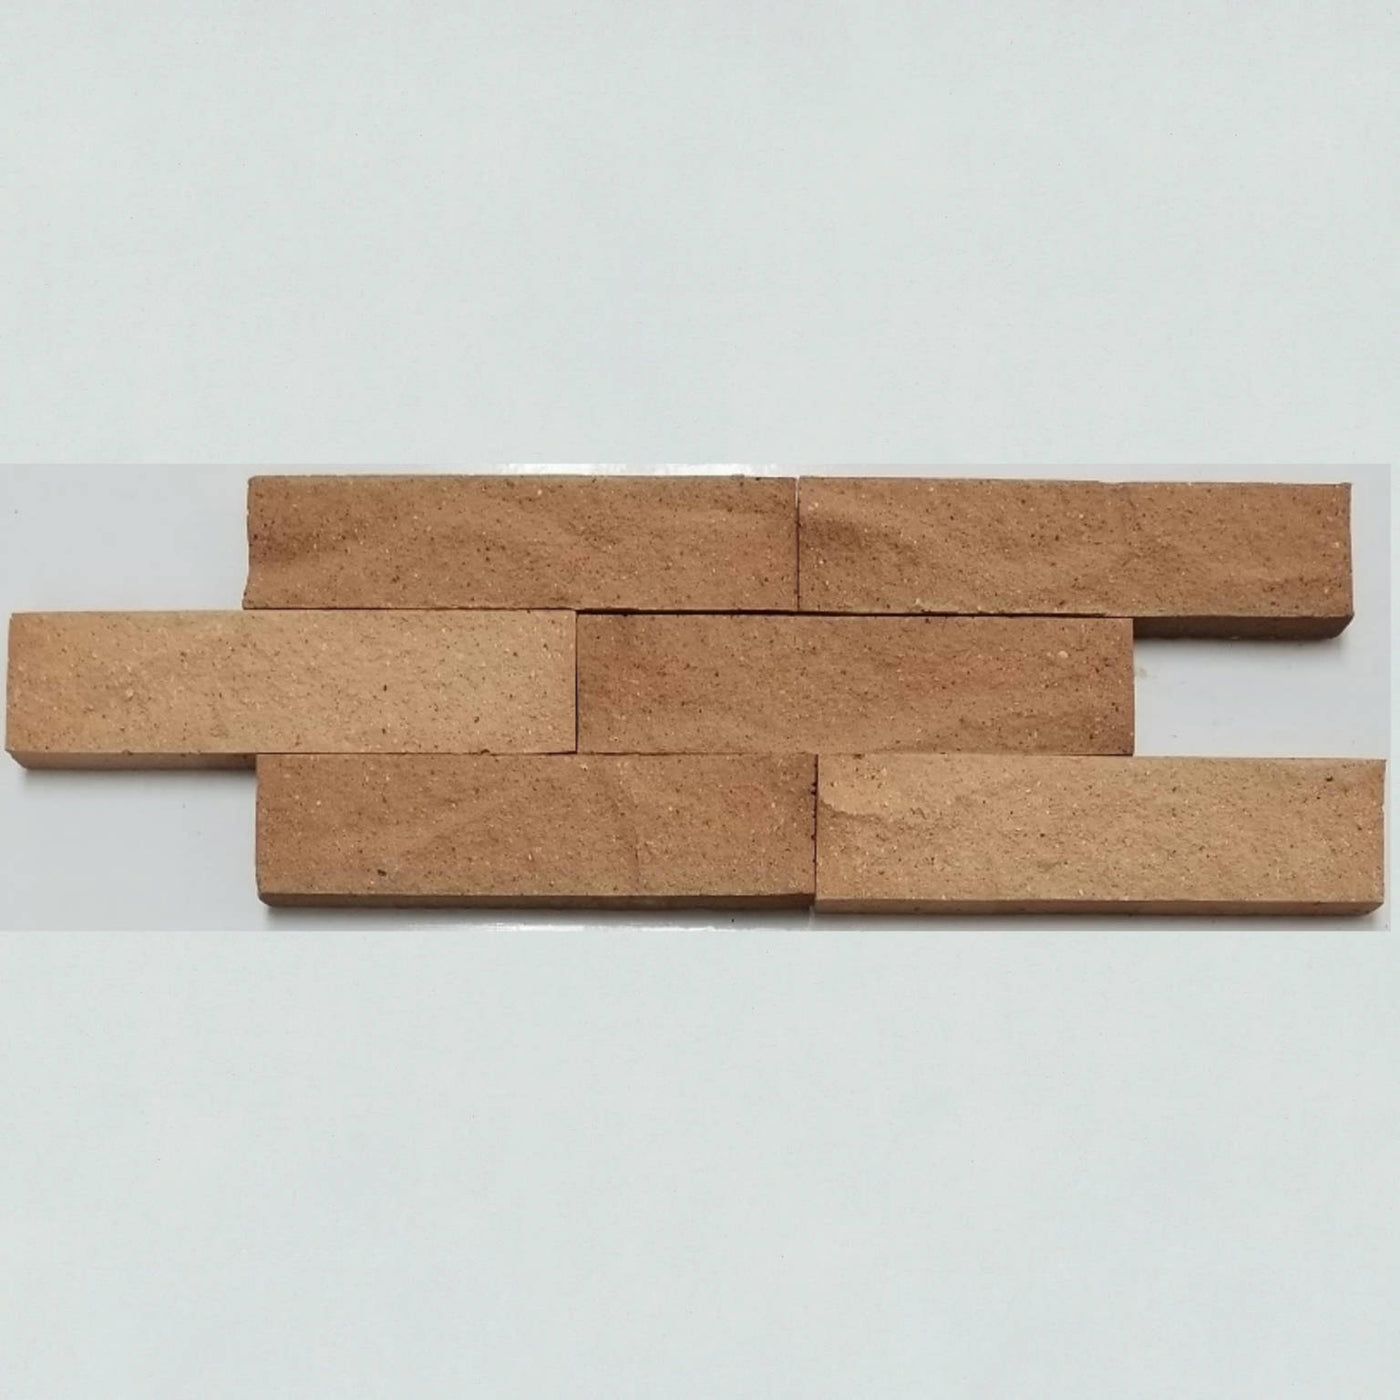 Alfagres Split Face 2" x 8" Brick Tile